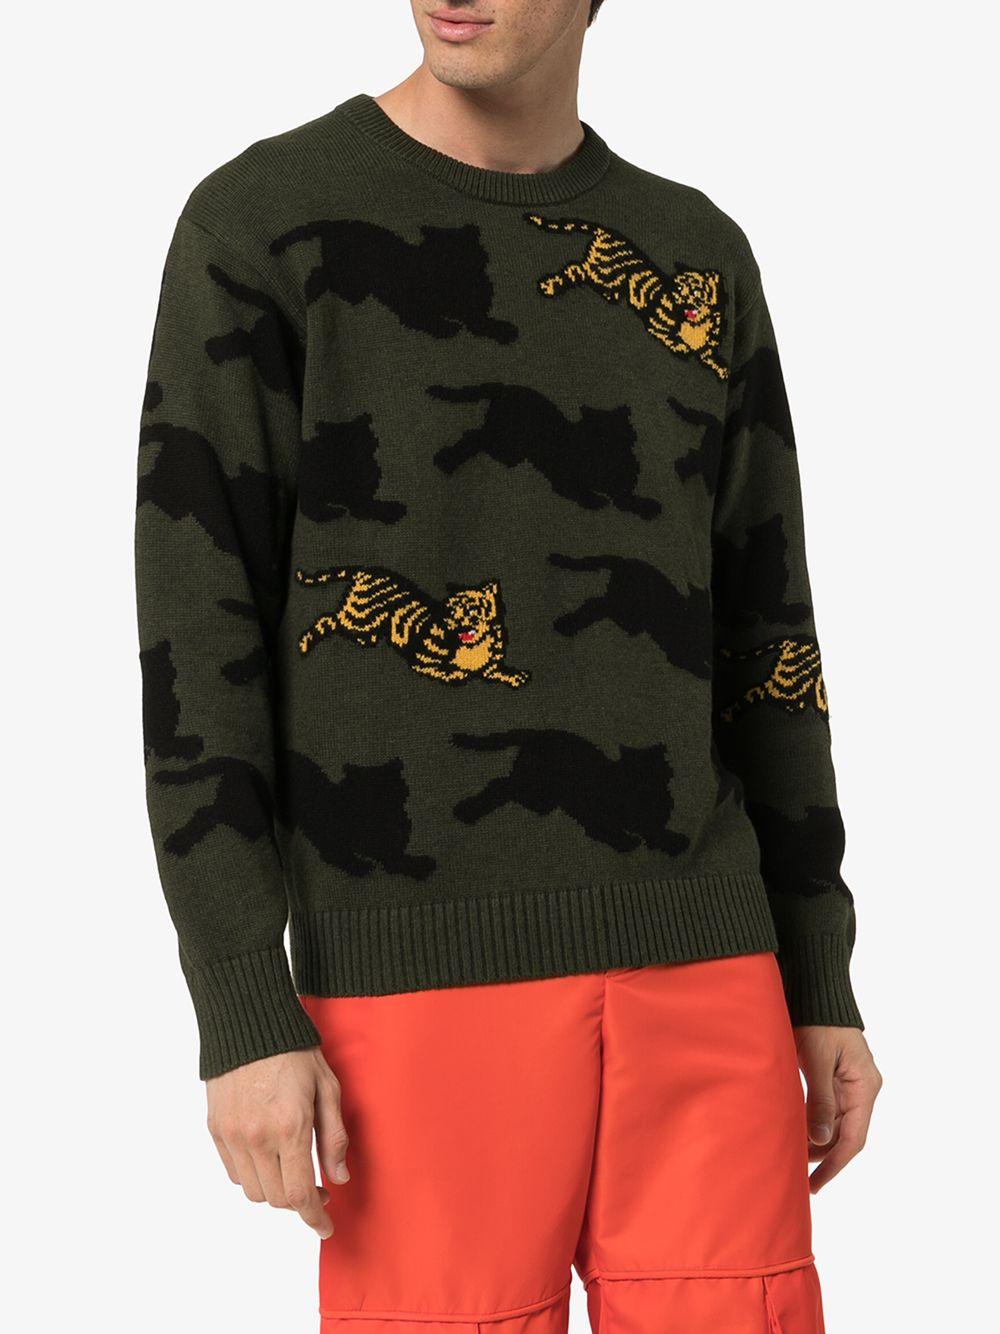 kenzo sweater price